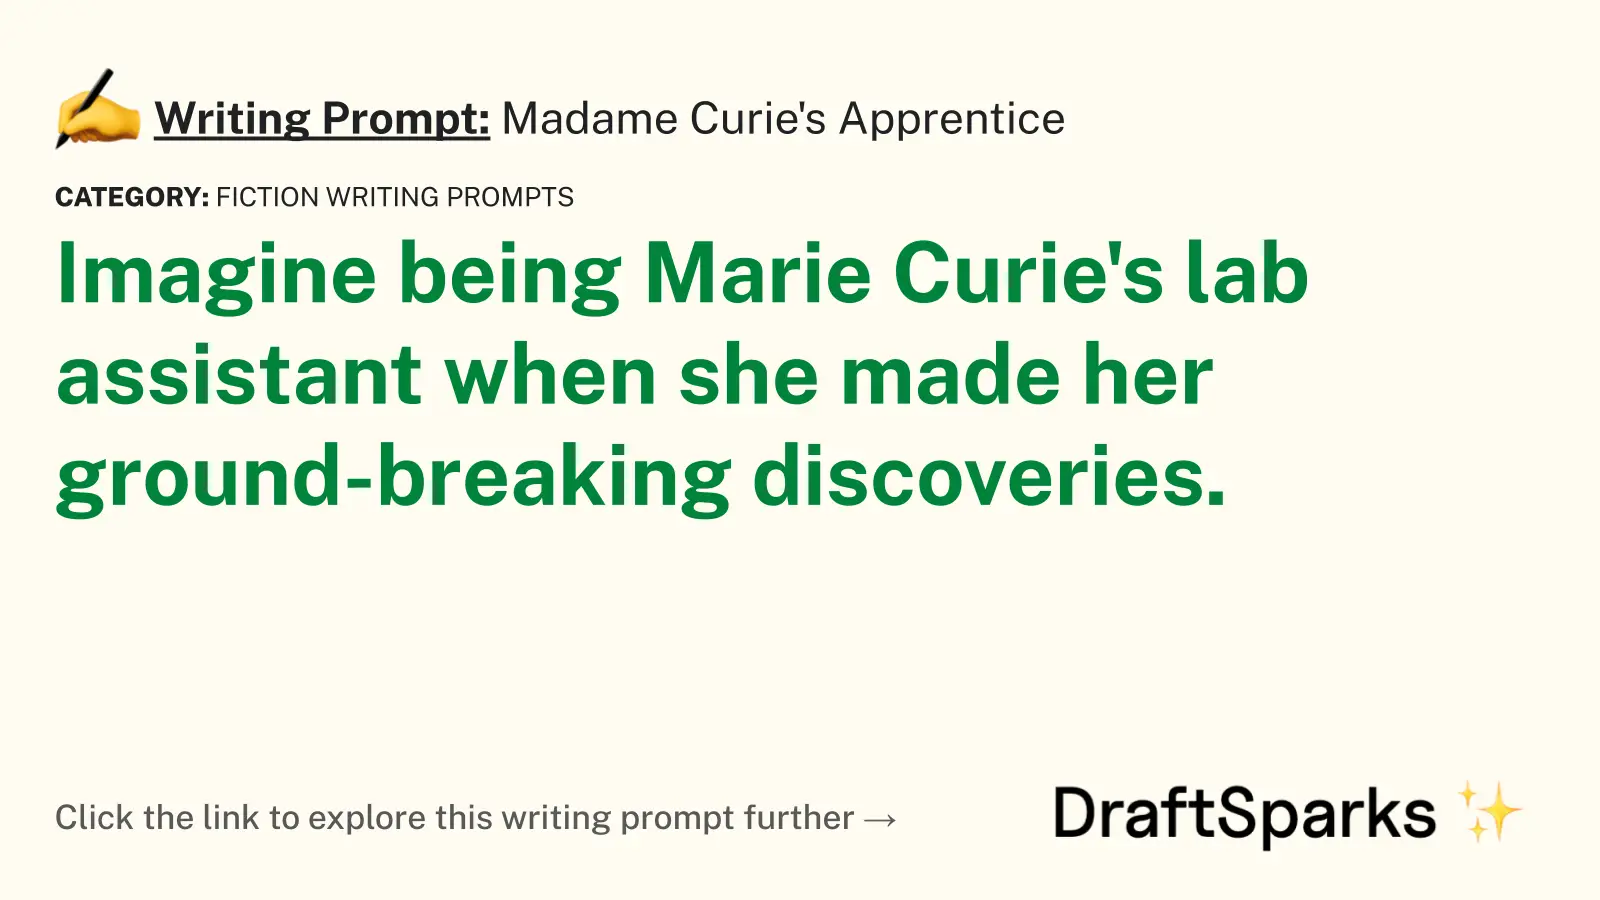 Madame Curie’s Apprentice